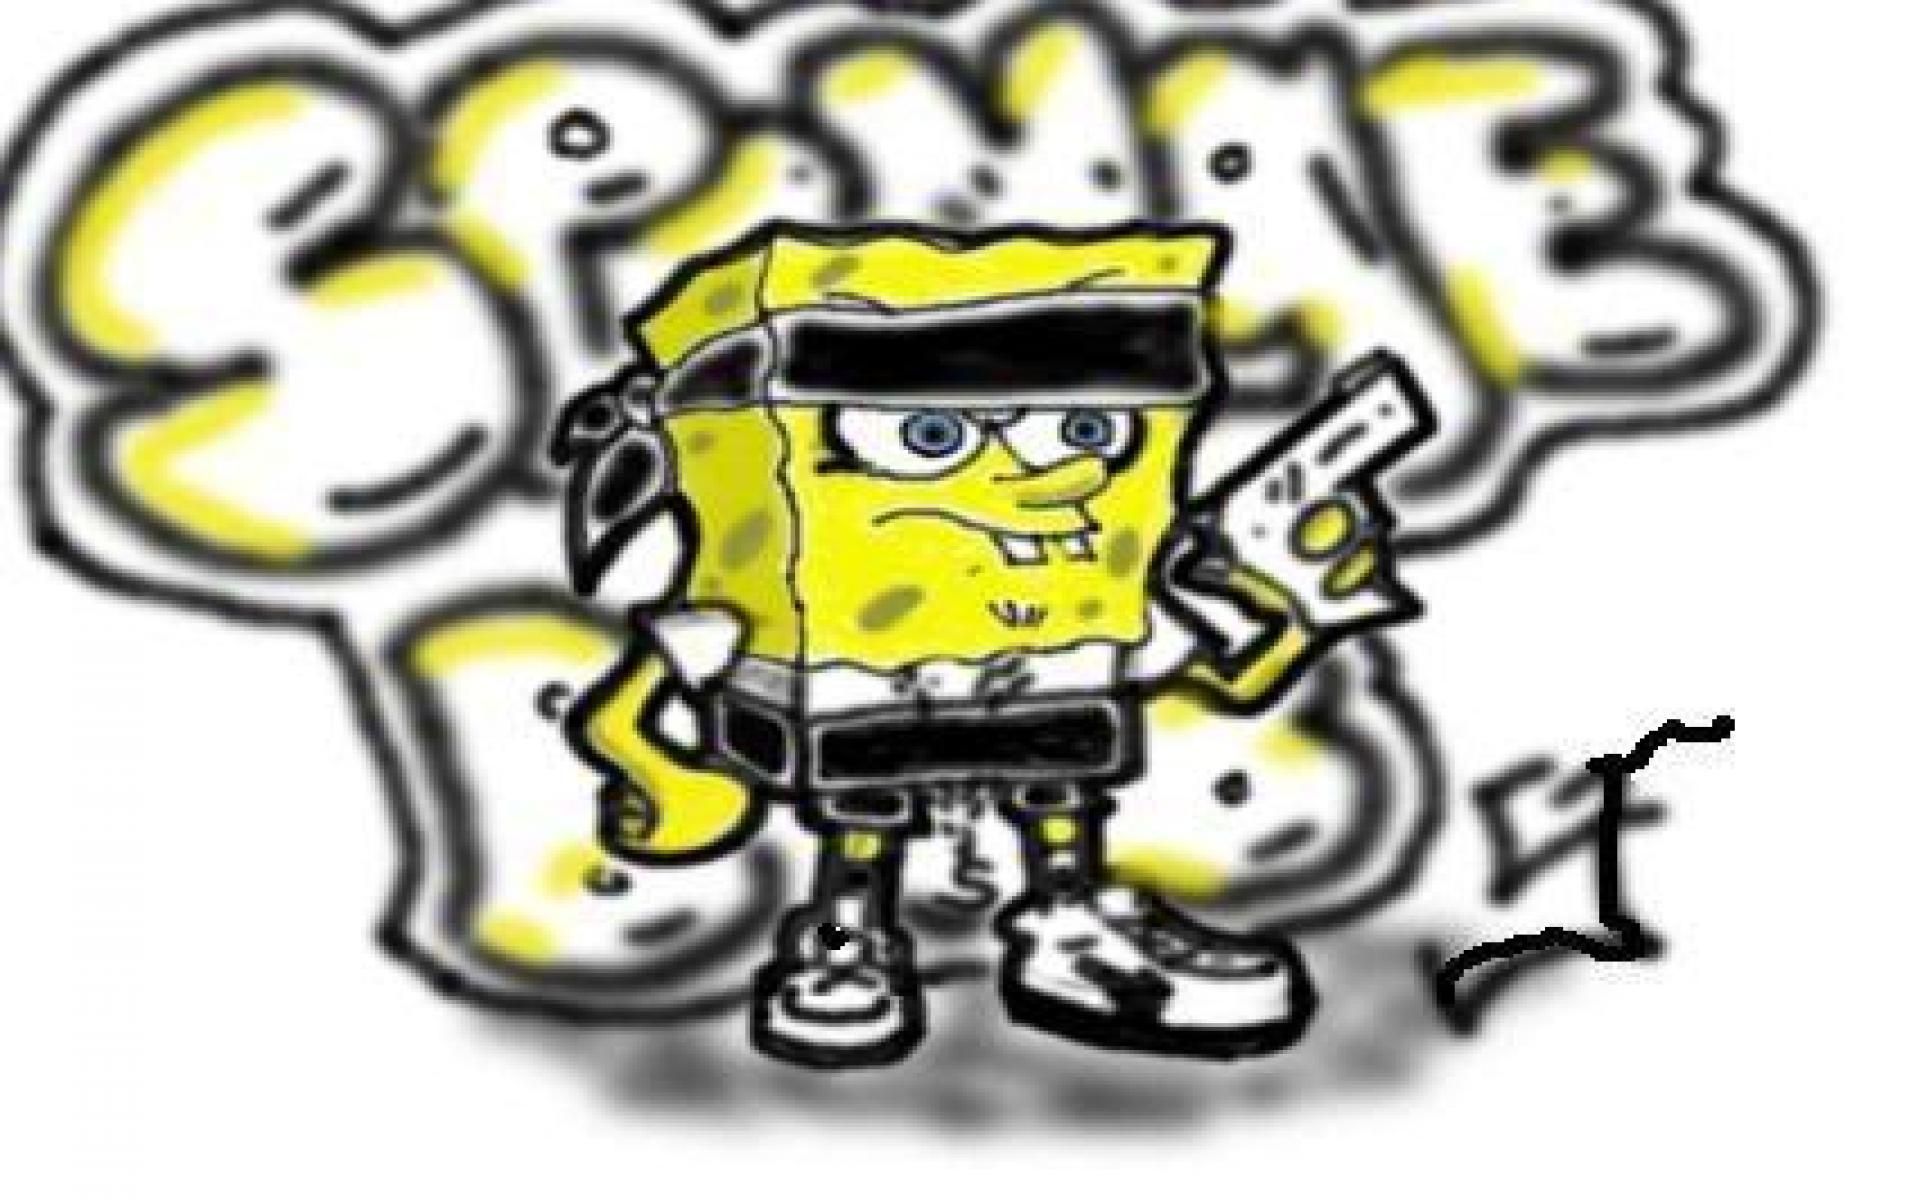 ghetto spongebob drawing